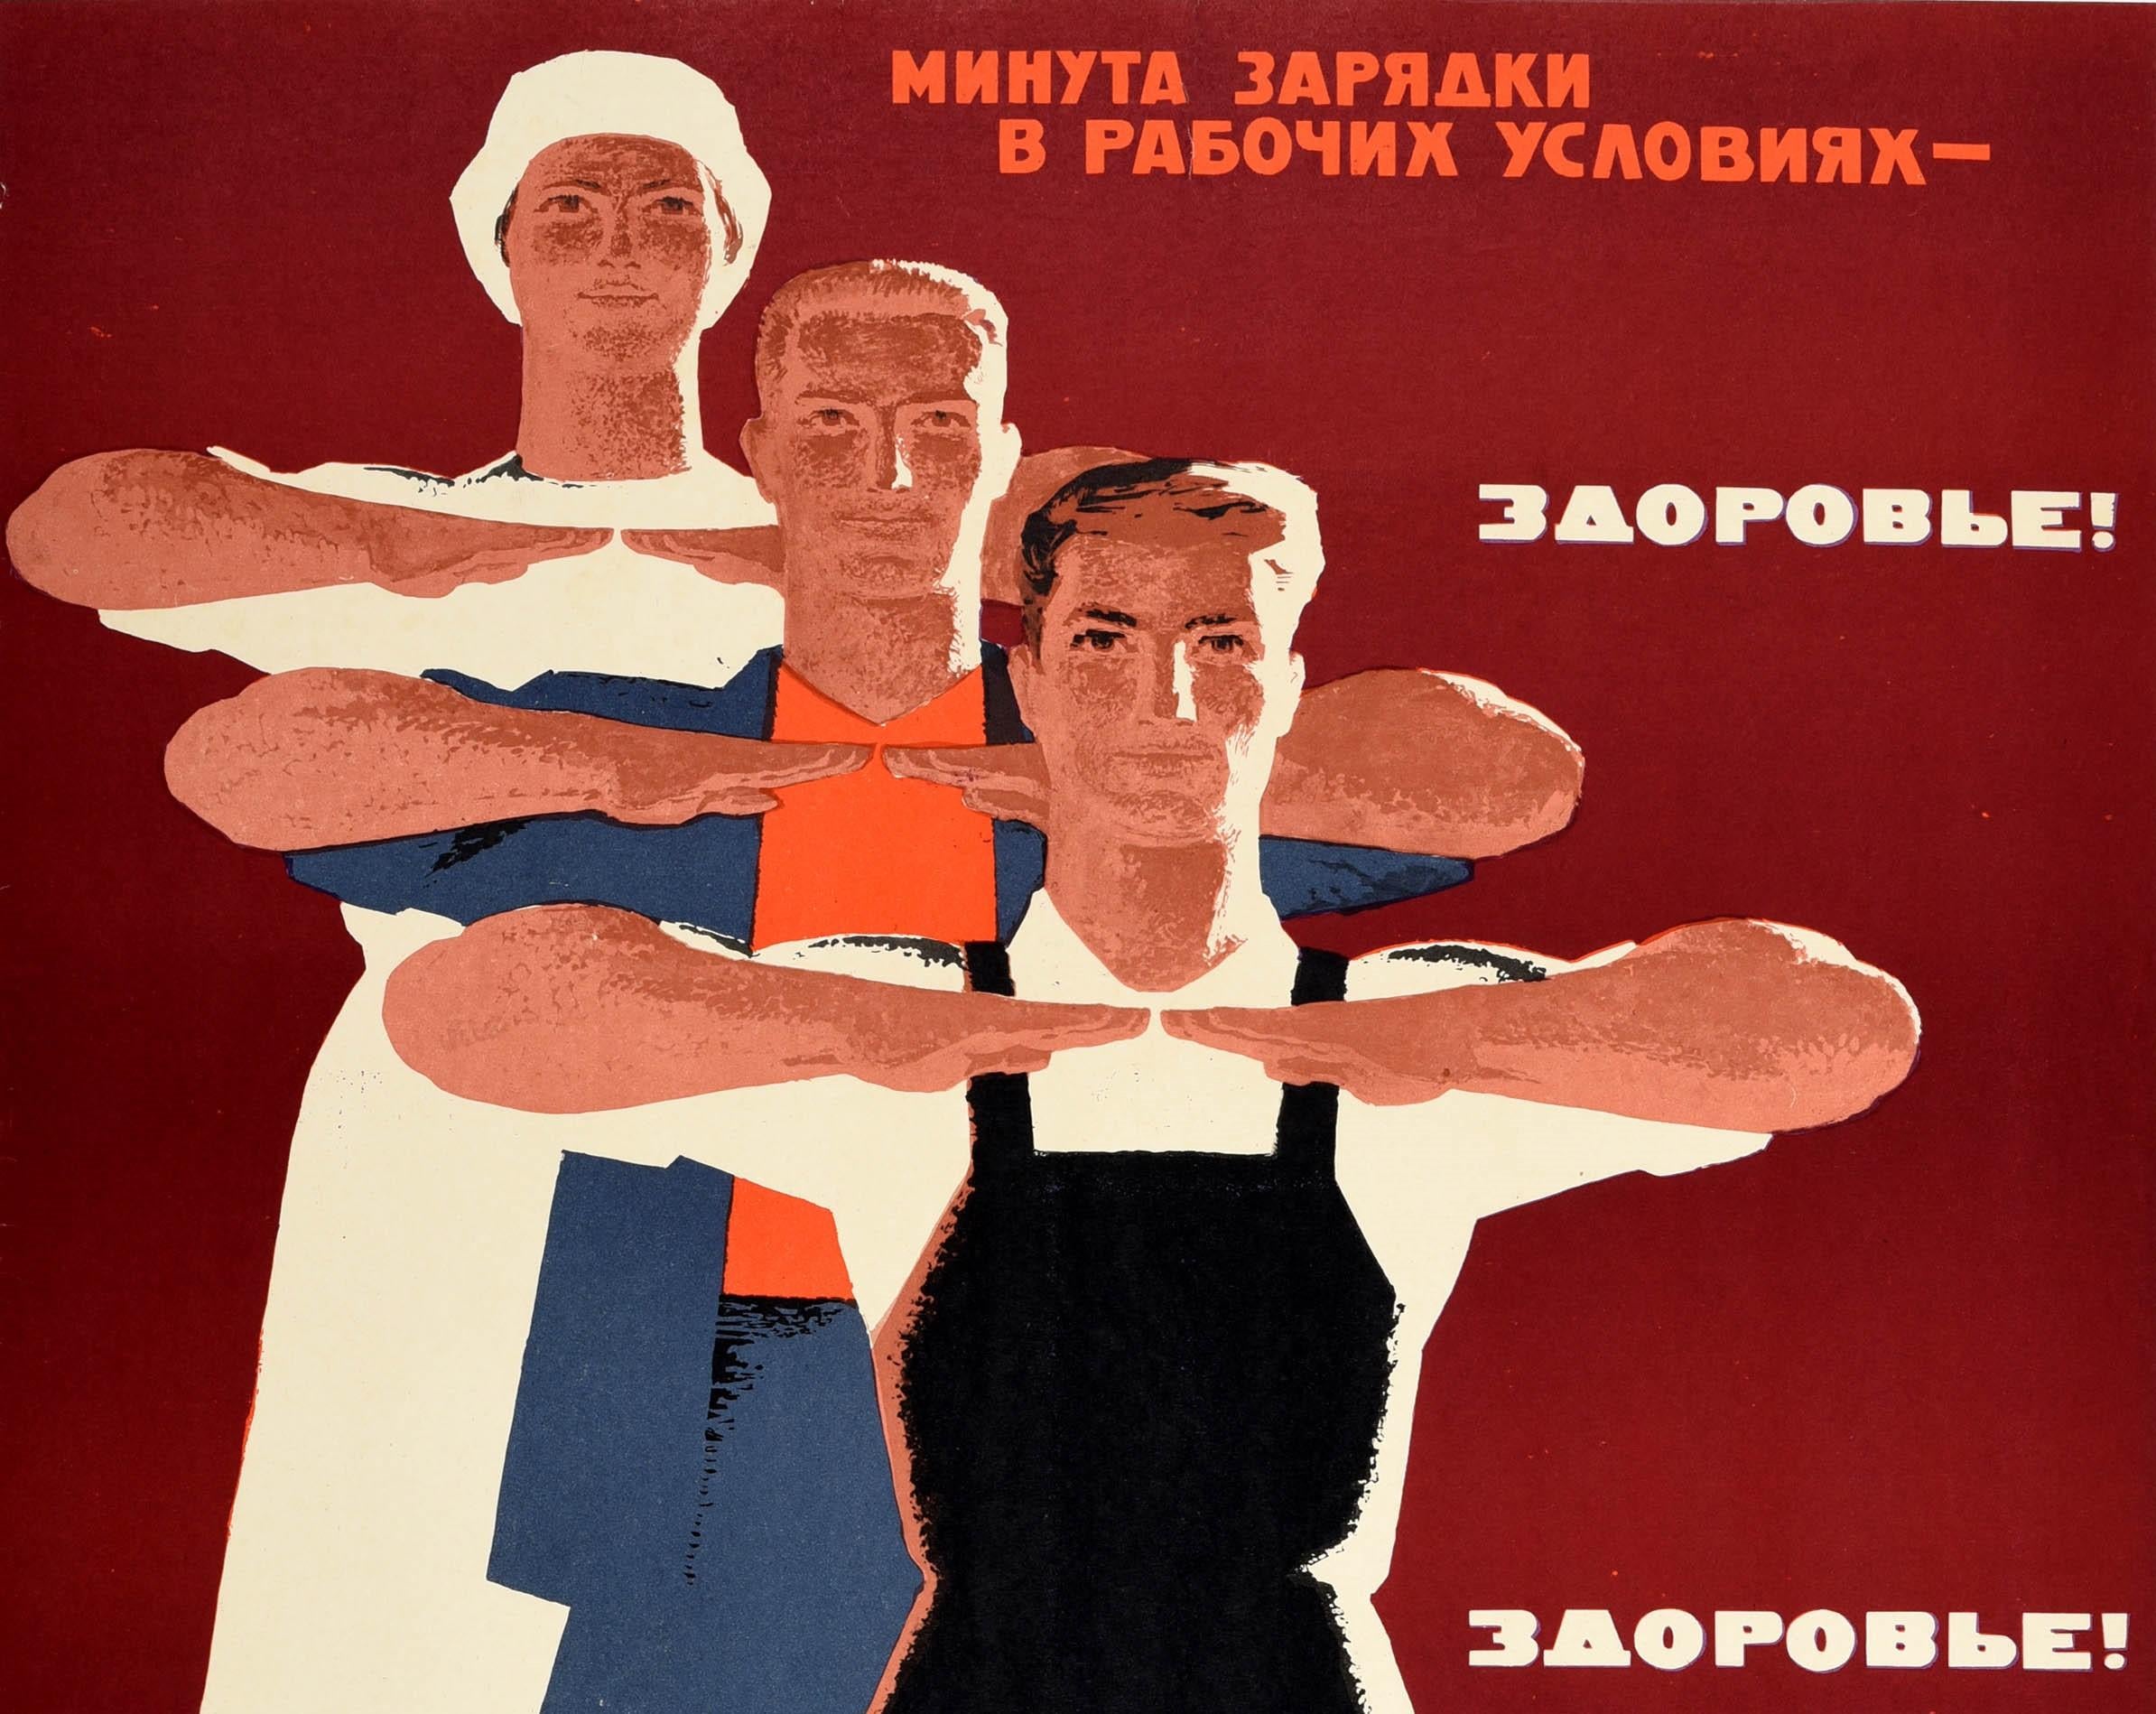 Original Vintage Soviet Poster Health At Work USSR Exercise Wellbeing Fitness - Print by Maslyakov Tsvik